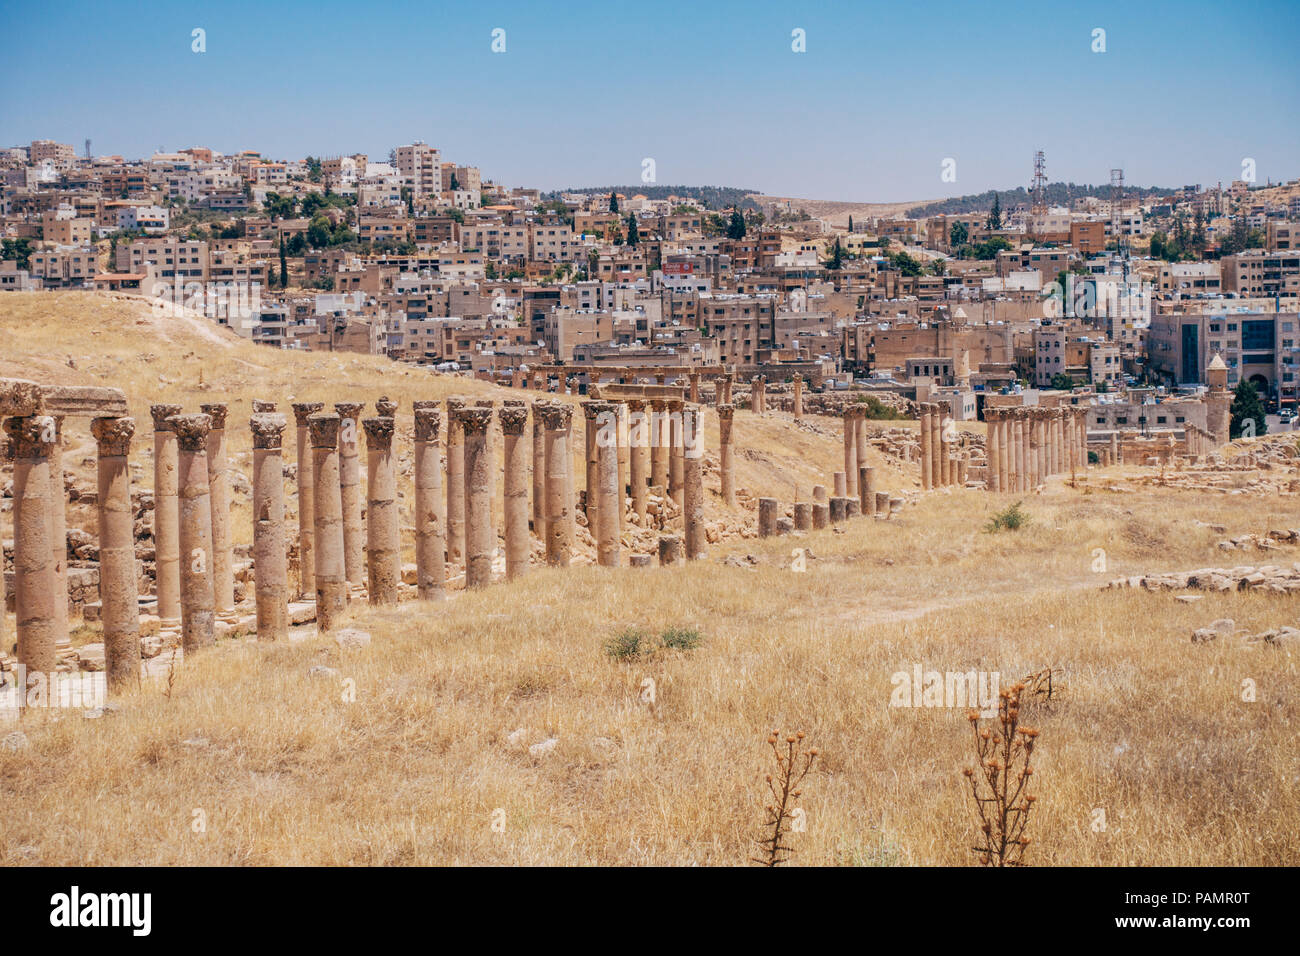 Antiguo grecorromano línea columnas calles adoquinadas en un cálido día de verano en Jerash, Jordania Foto de stock